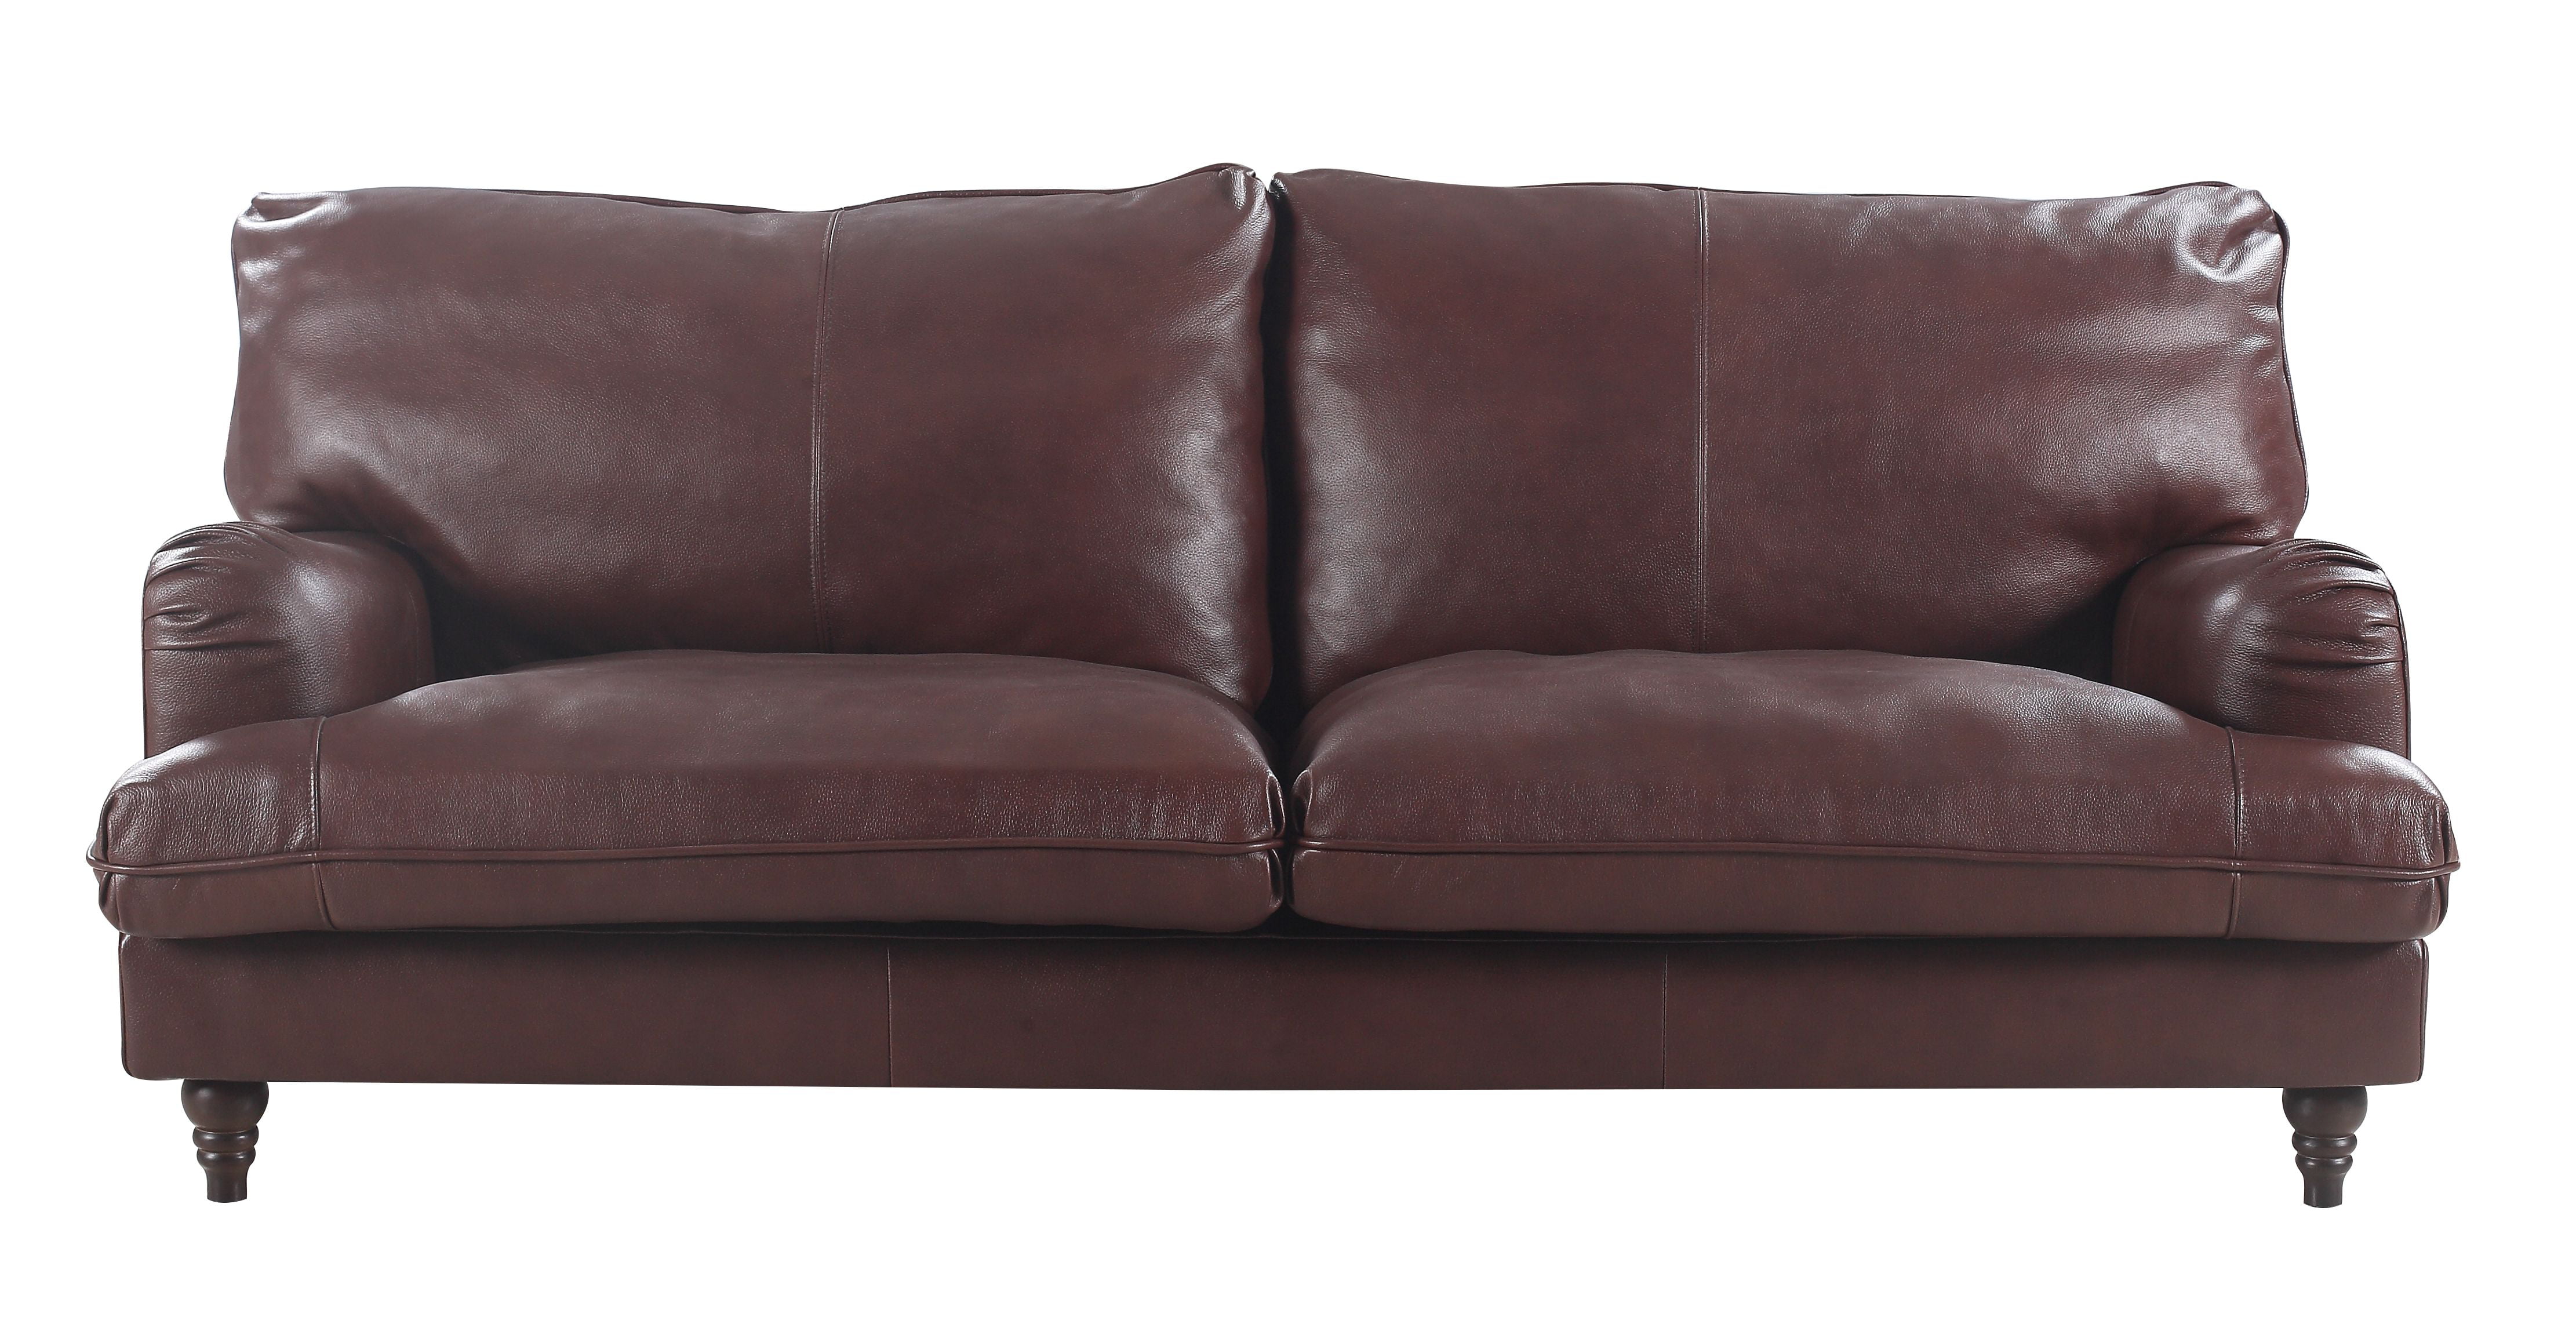 classic leather sofa cost